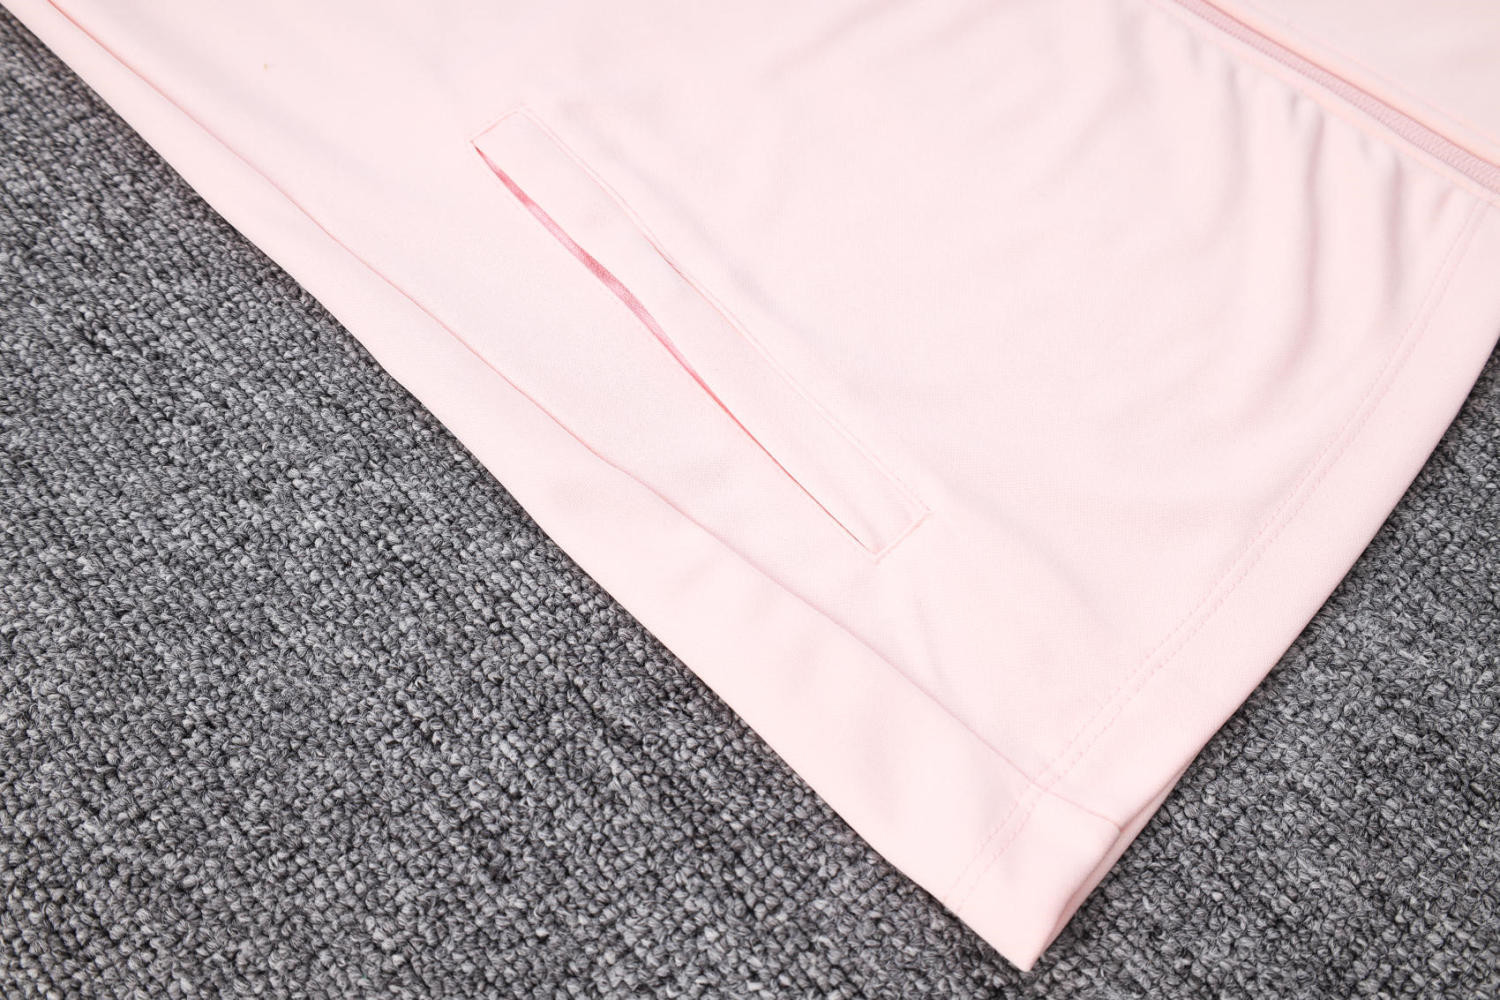 PSG Soccer Jacket + Pants Replica Pink 2022/23 Mens